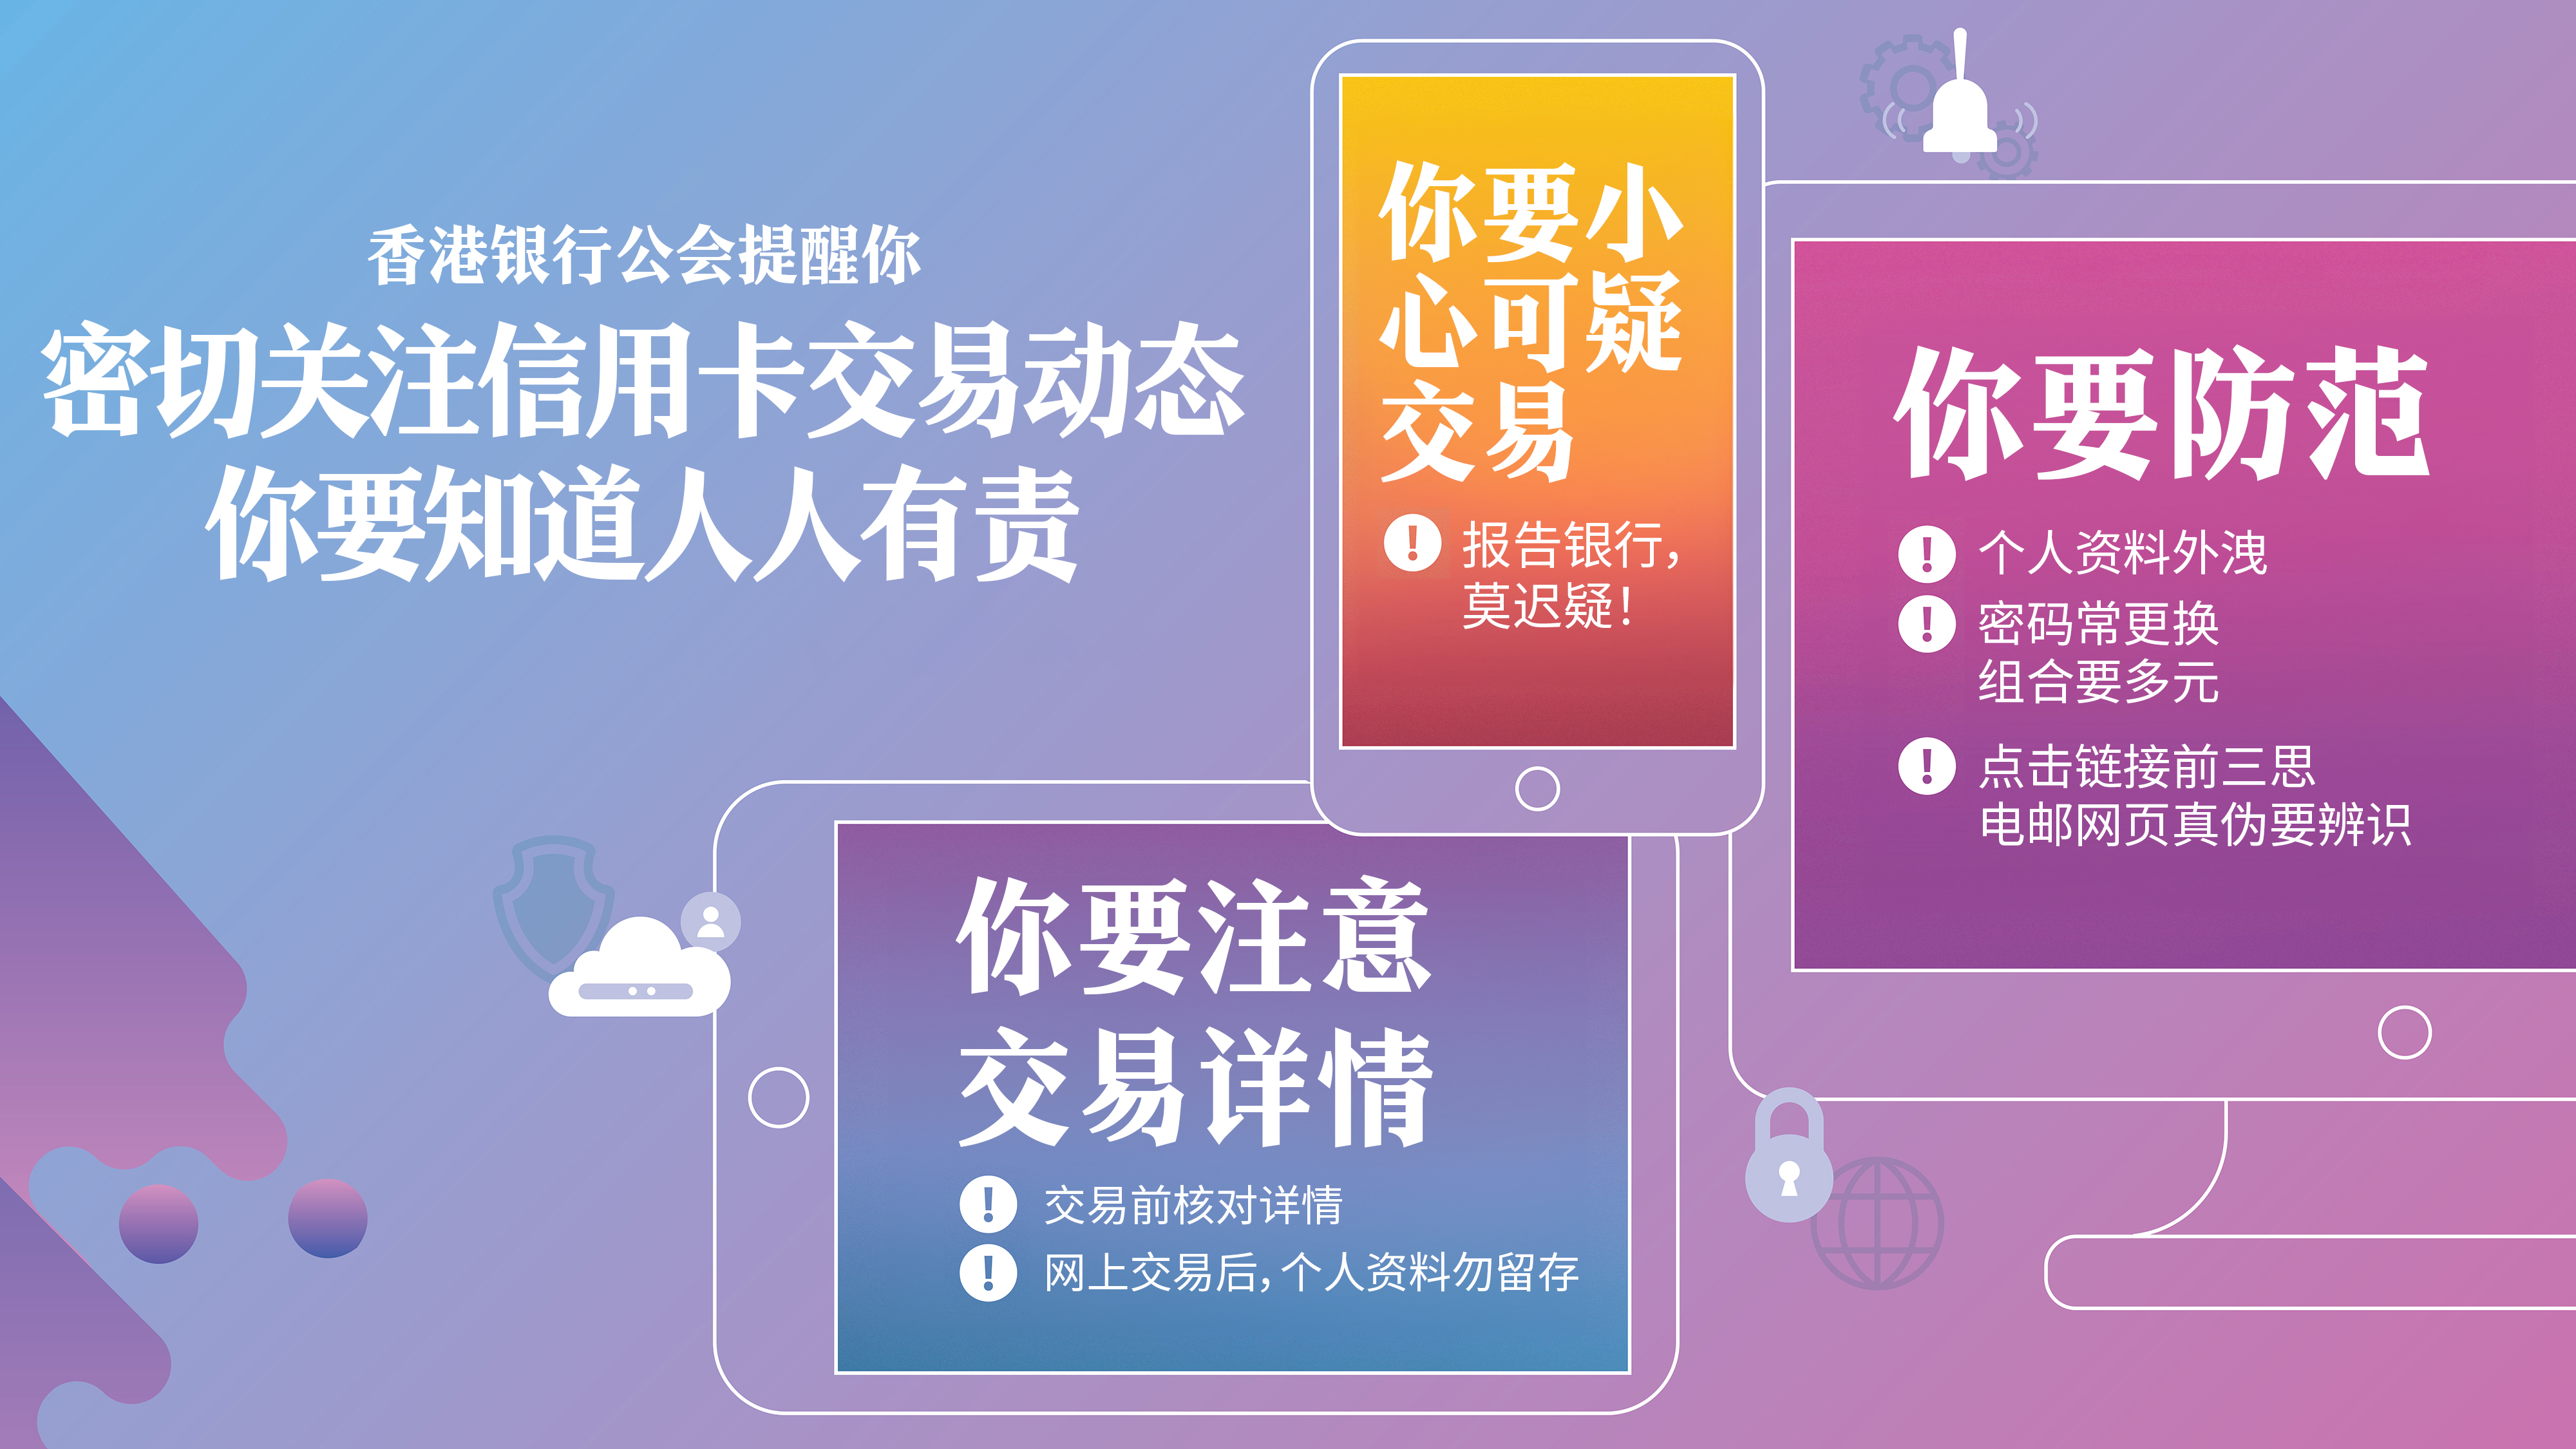 HKAB_website_banner_aw_outline-sc-1702972237.jpg